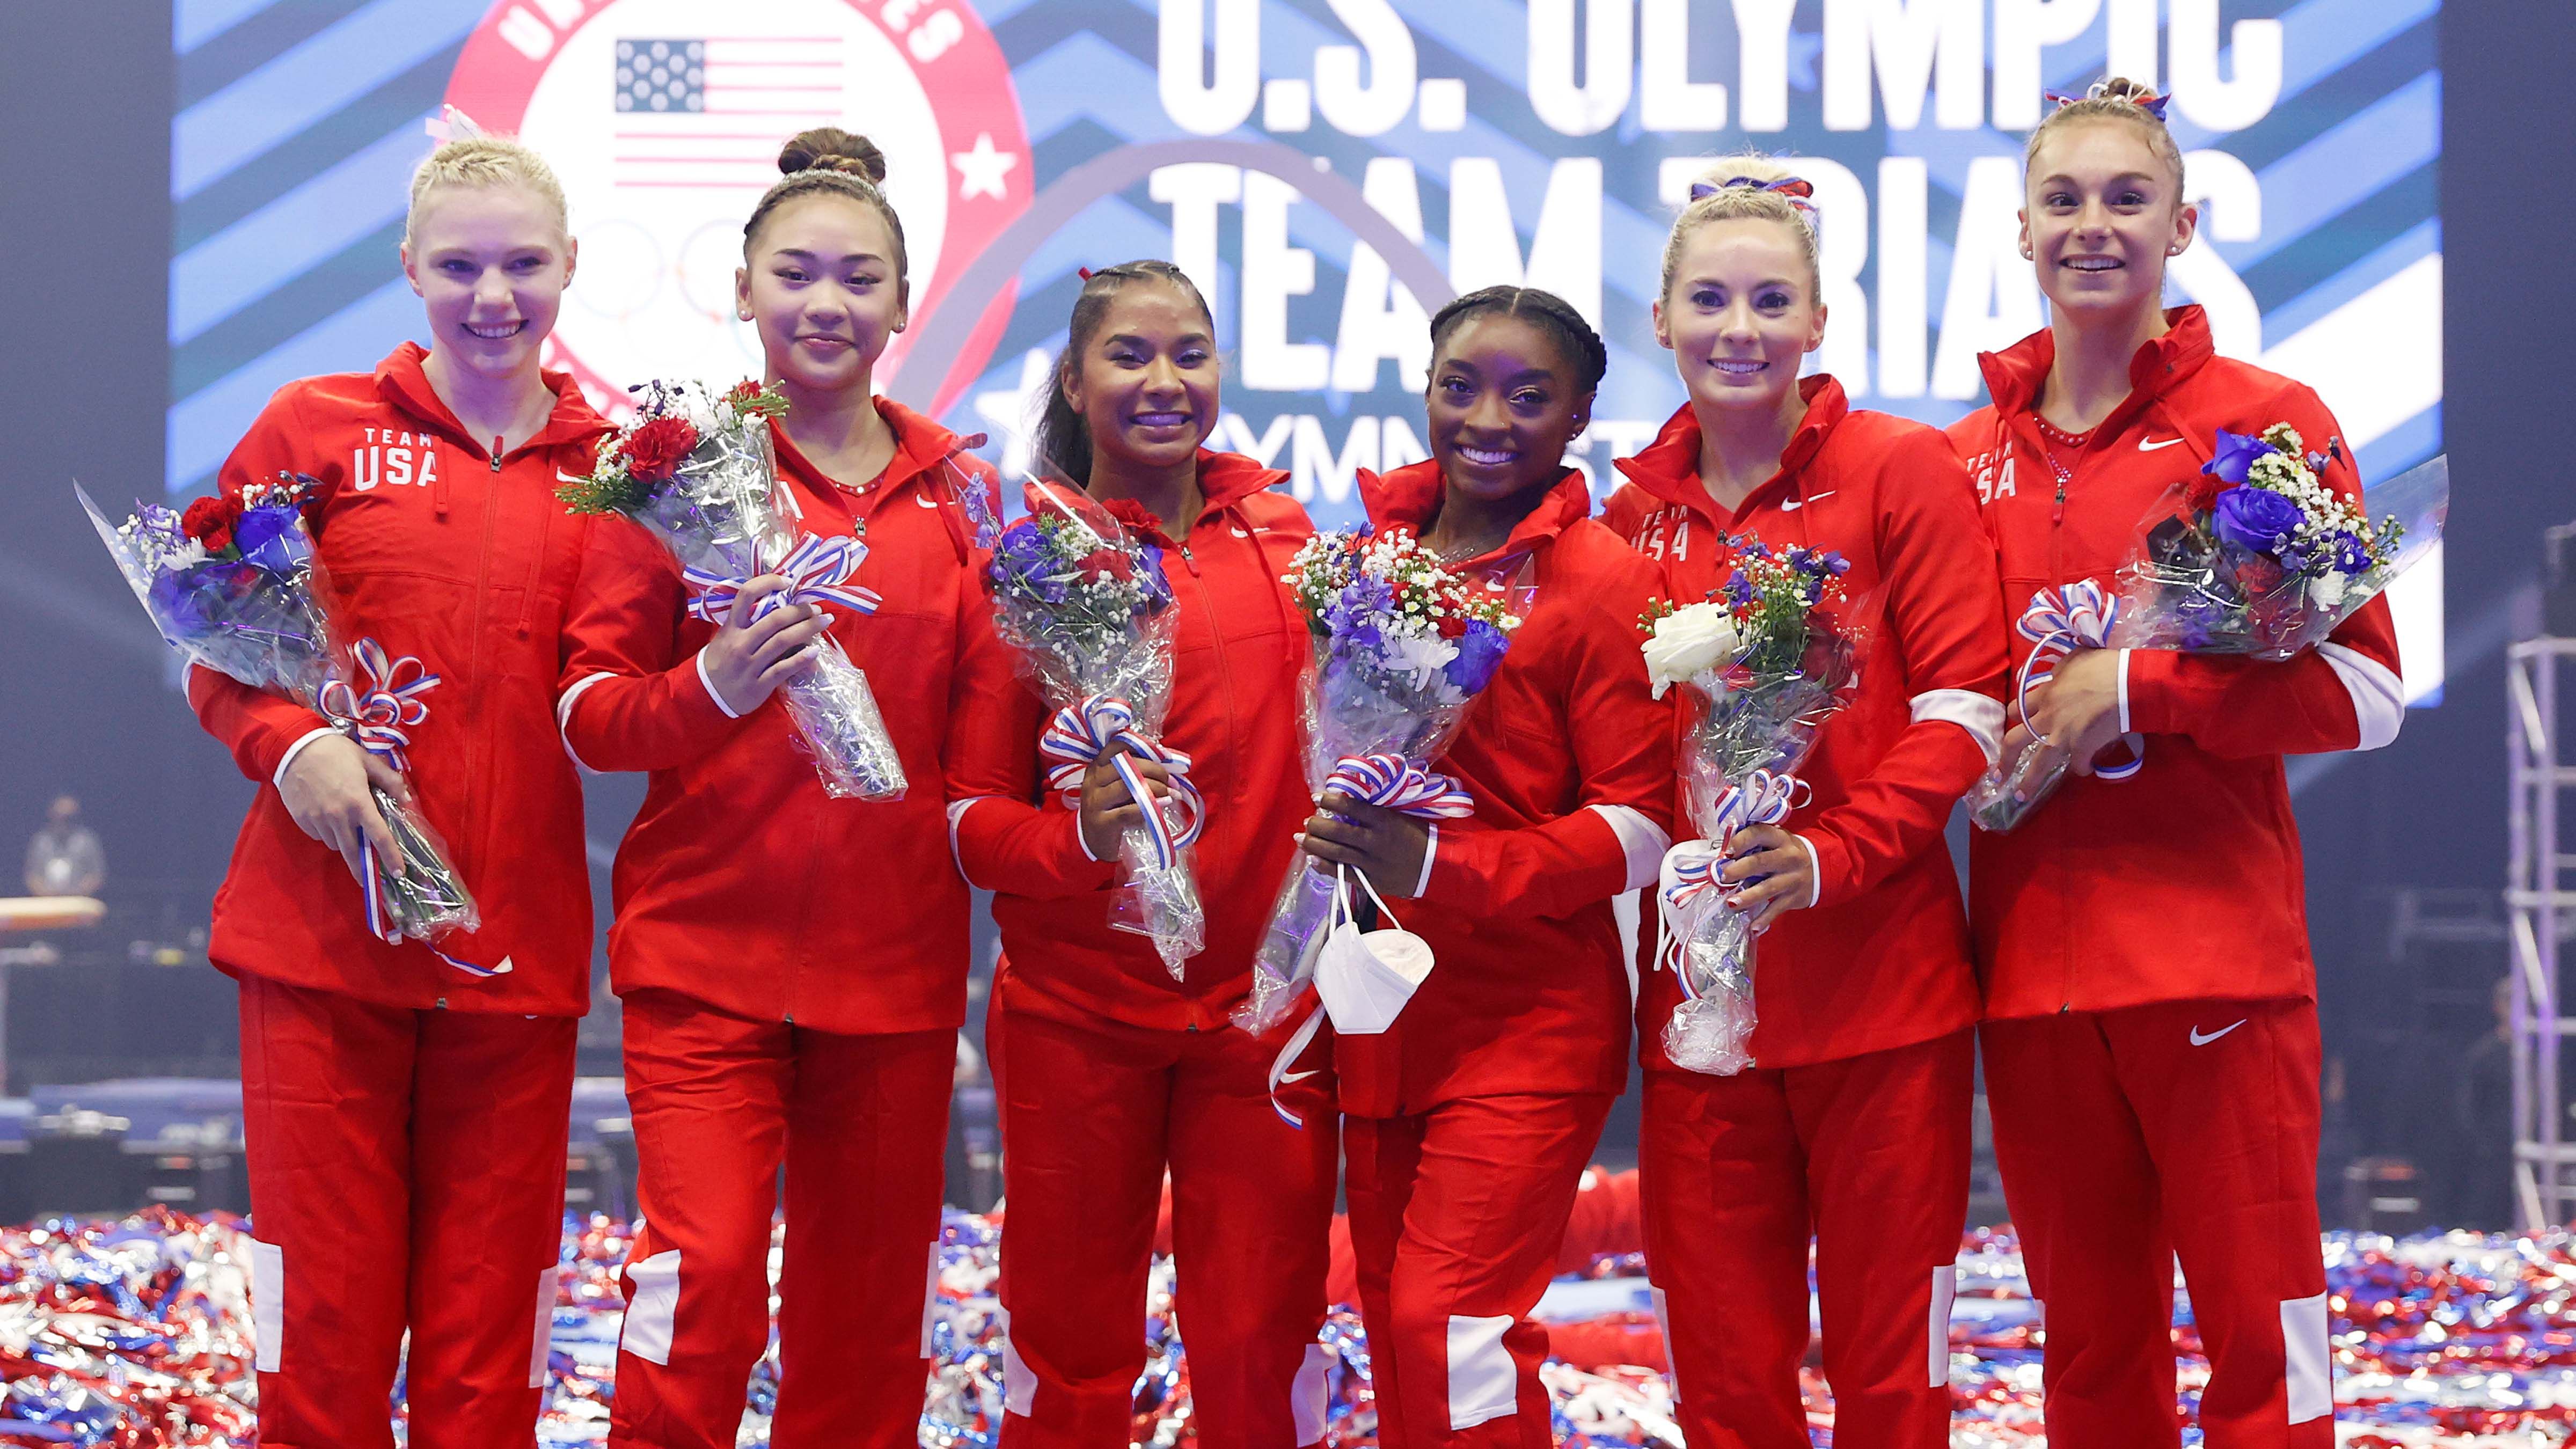 USA Gymnastics - USA Gymnastics added a new photo.